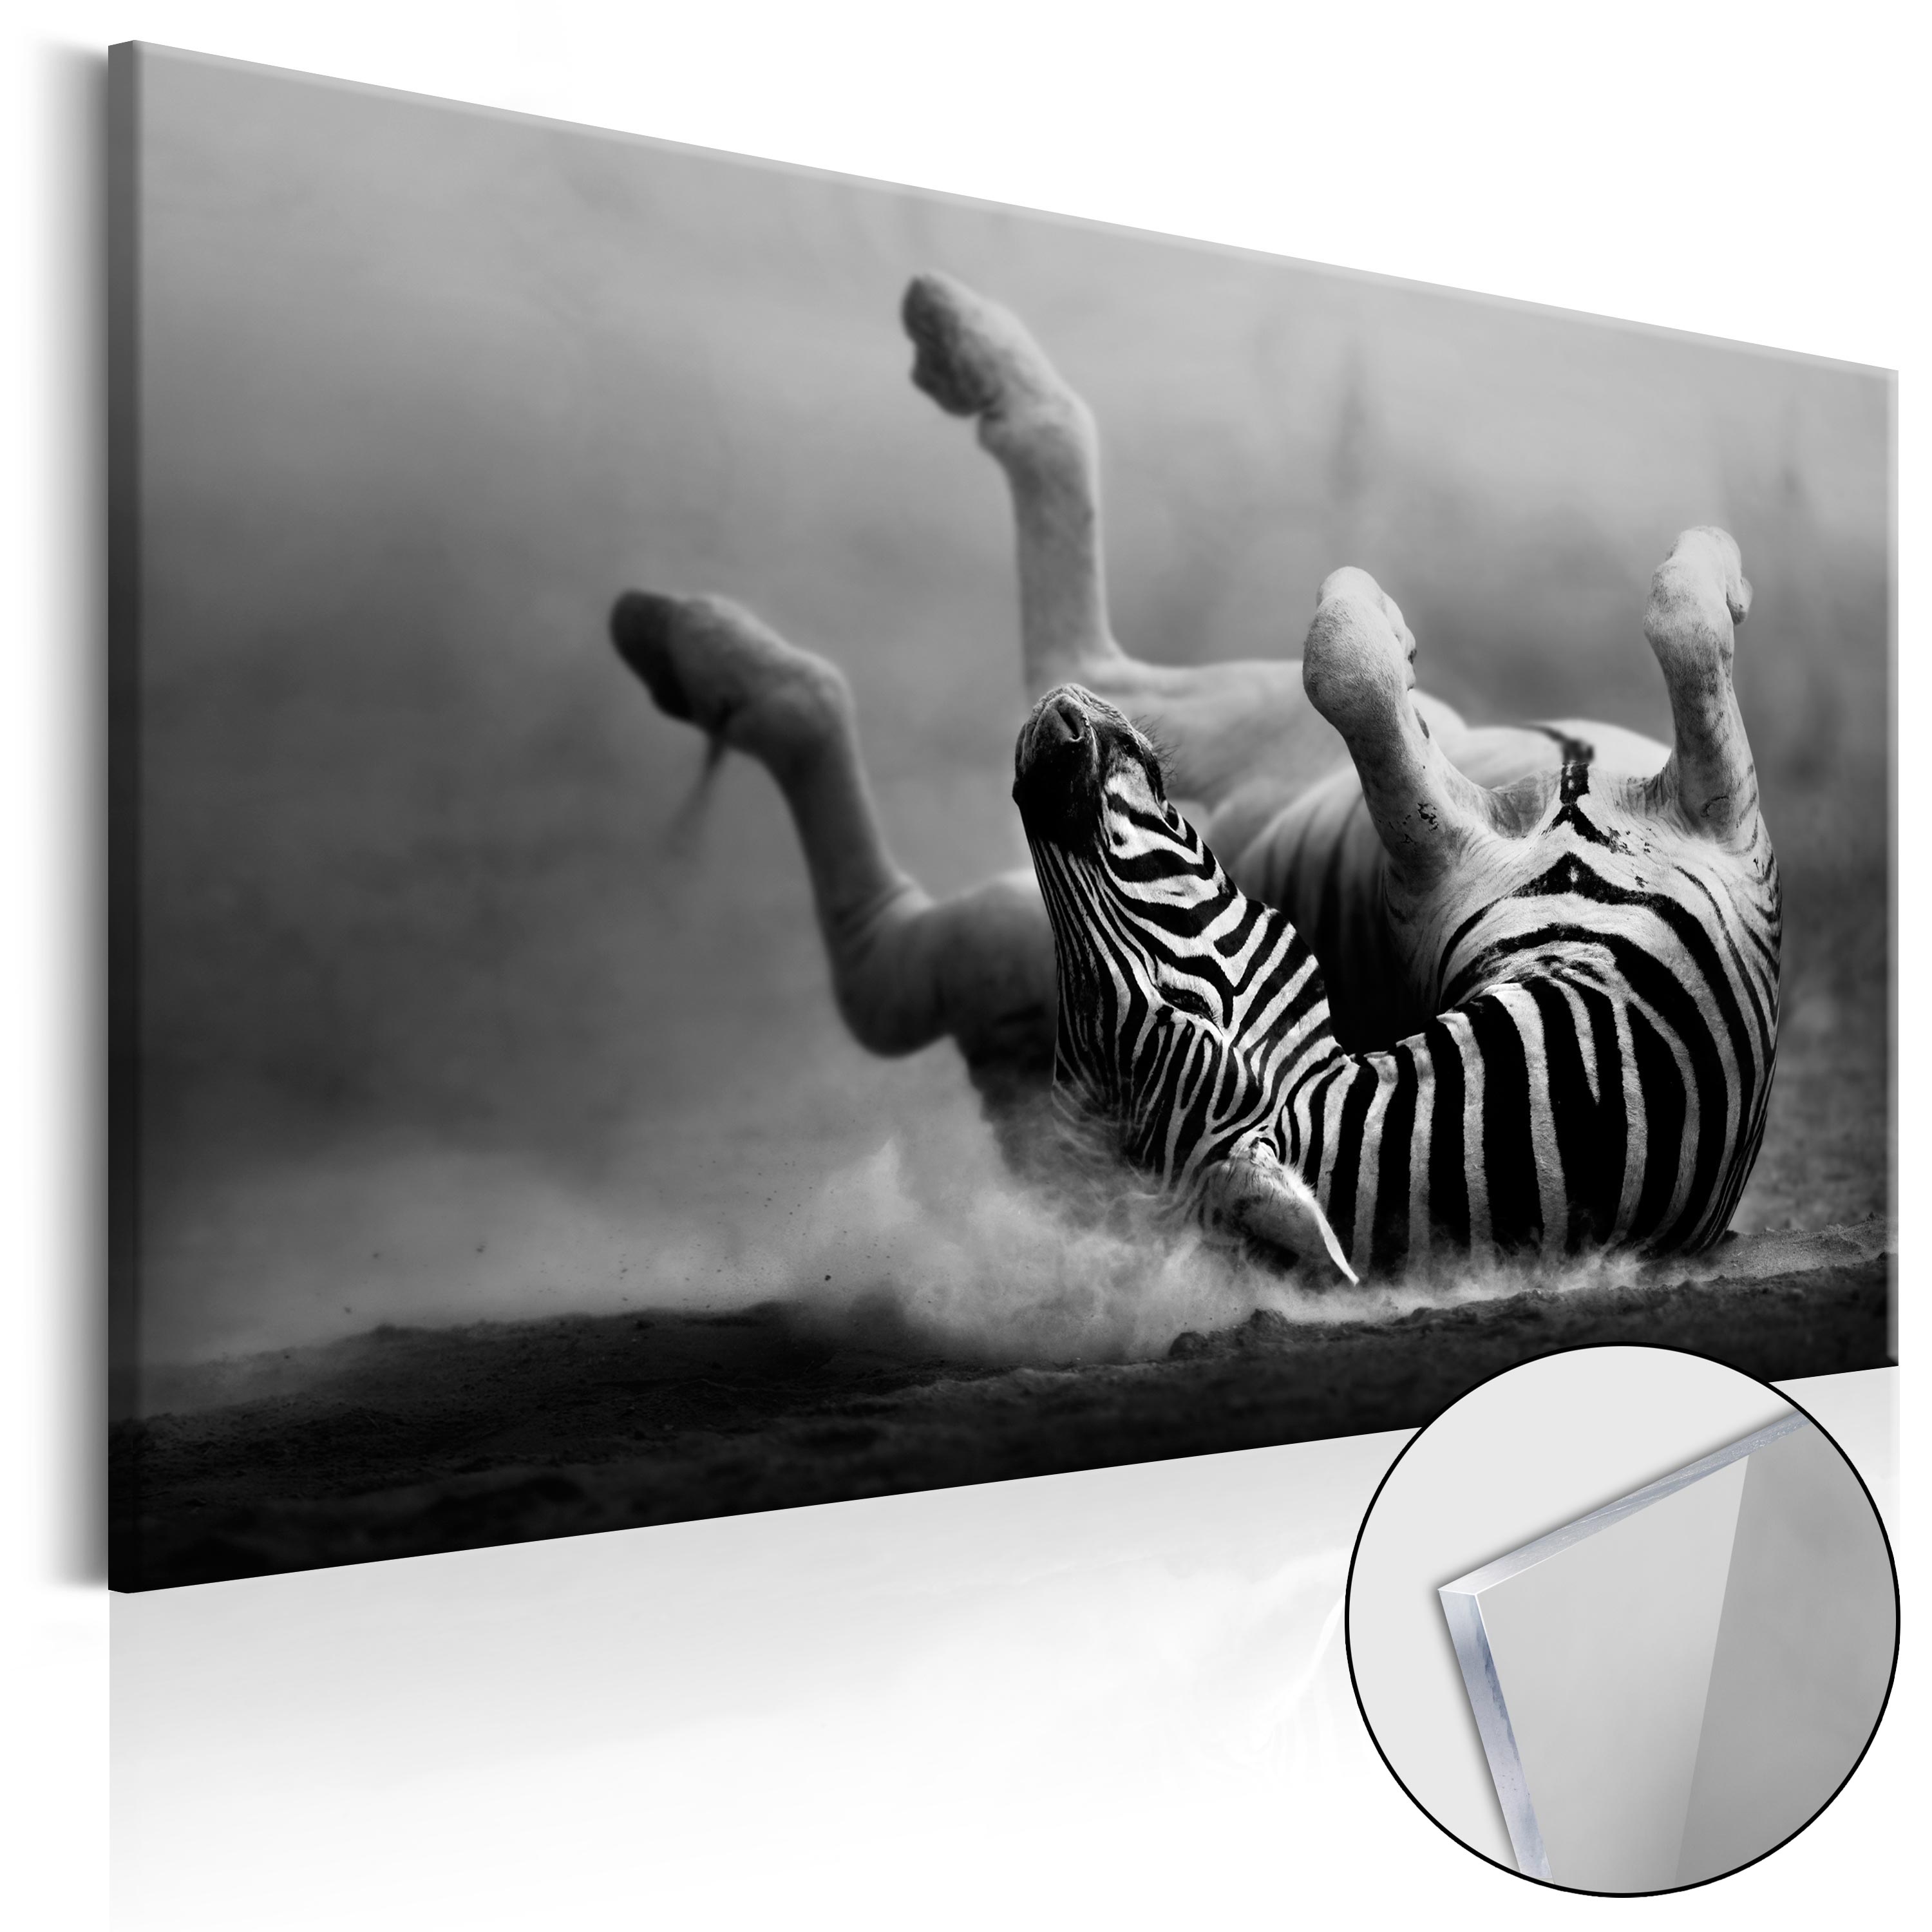 SPIELKONSOLE GAMER Acrylglasbild Modern Wandbild Glasbilder Bilder i-A-0183-k-i 